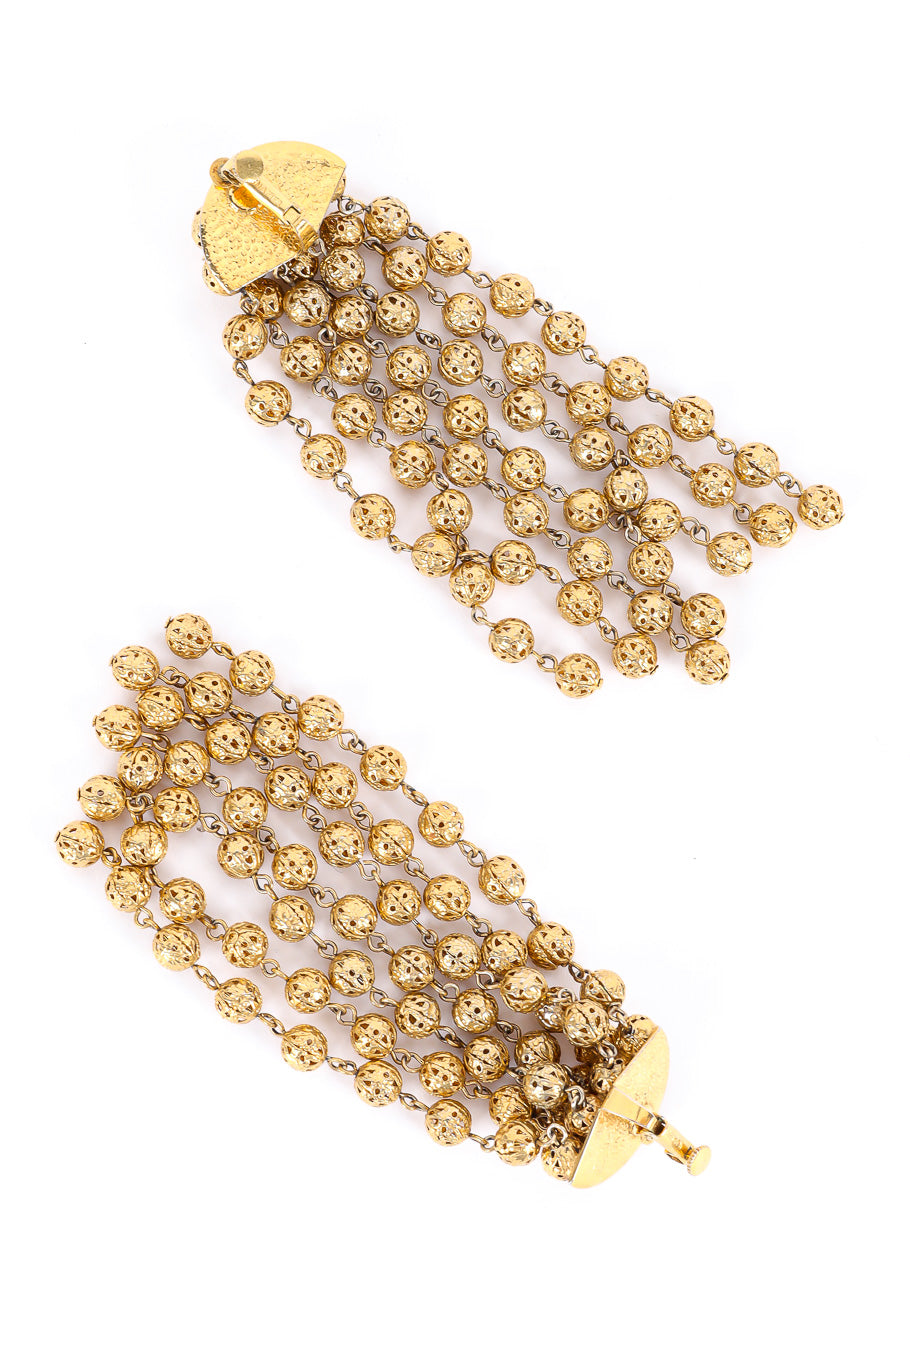 Long gold filigree ball shoulder duster drop earrings pair of earrings photo. @recessla